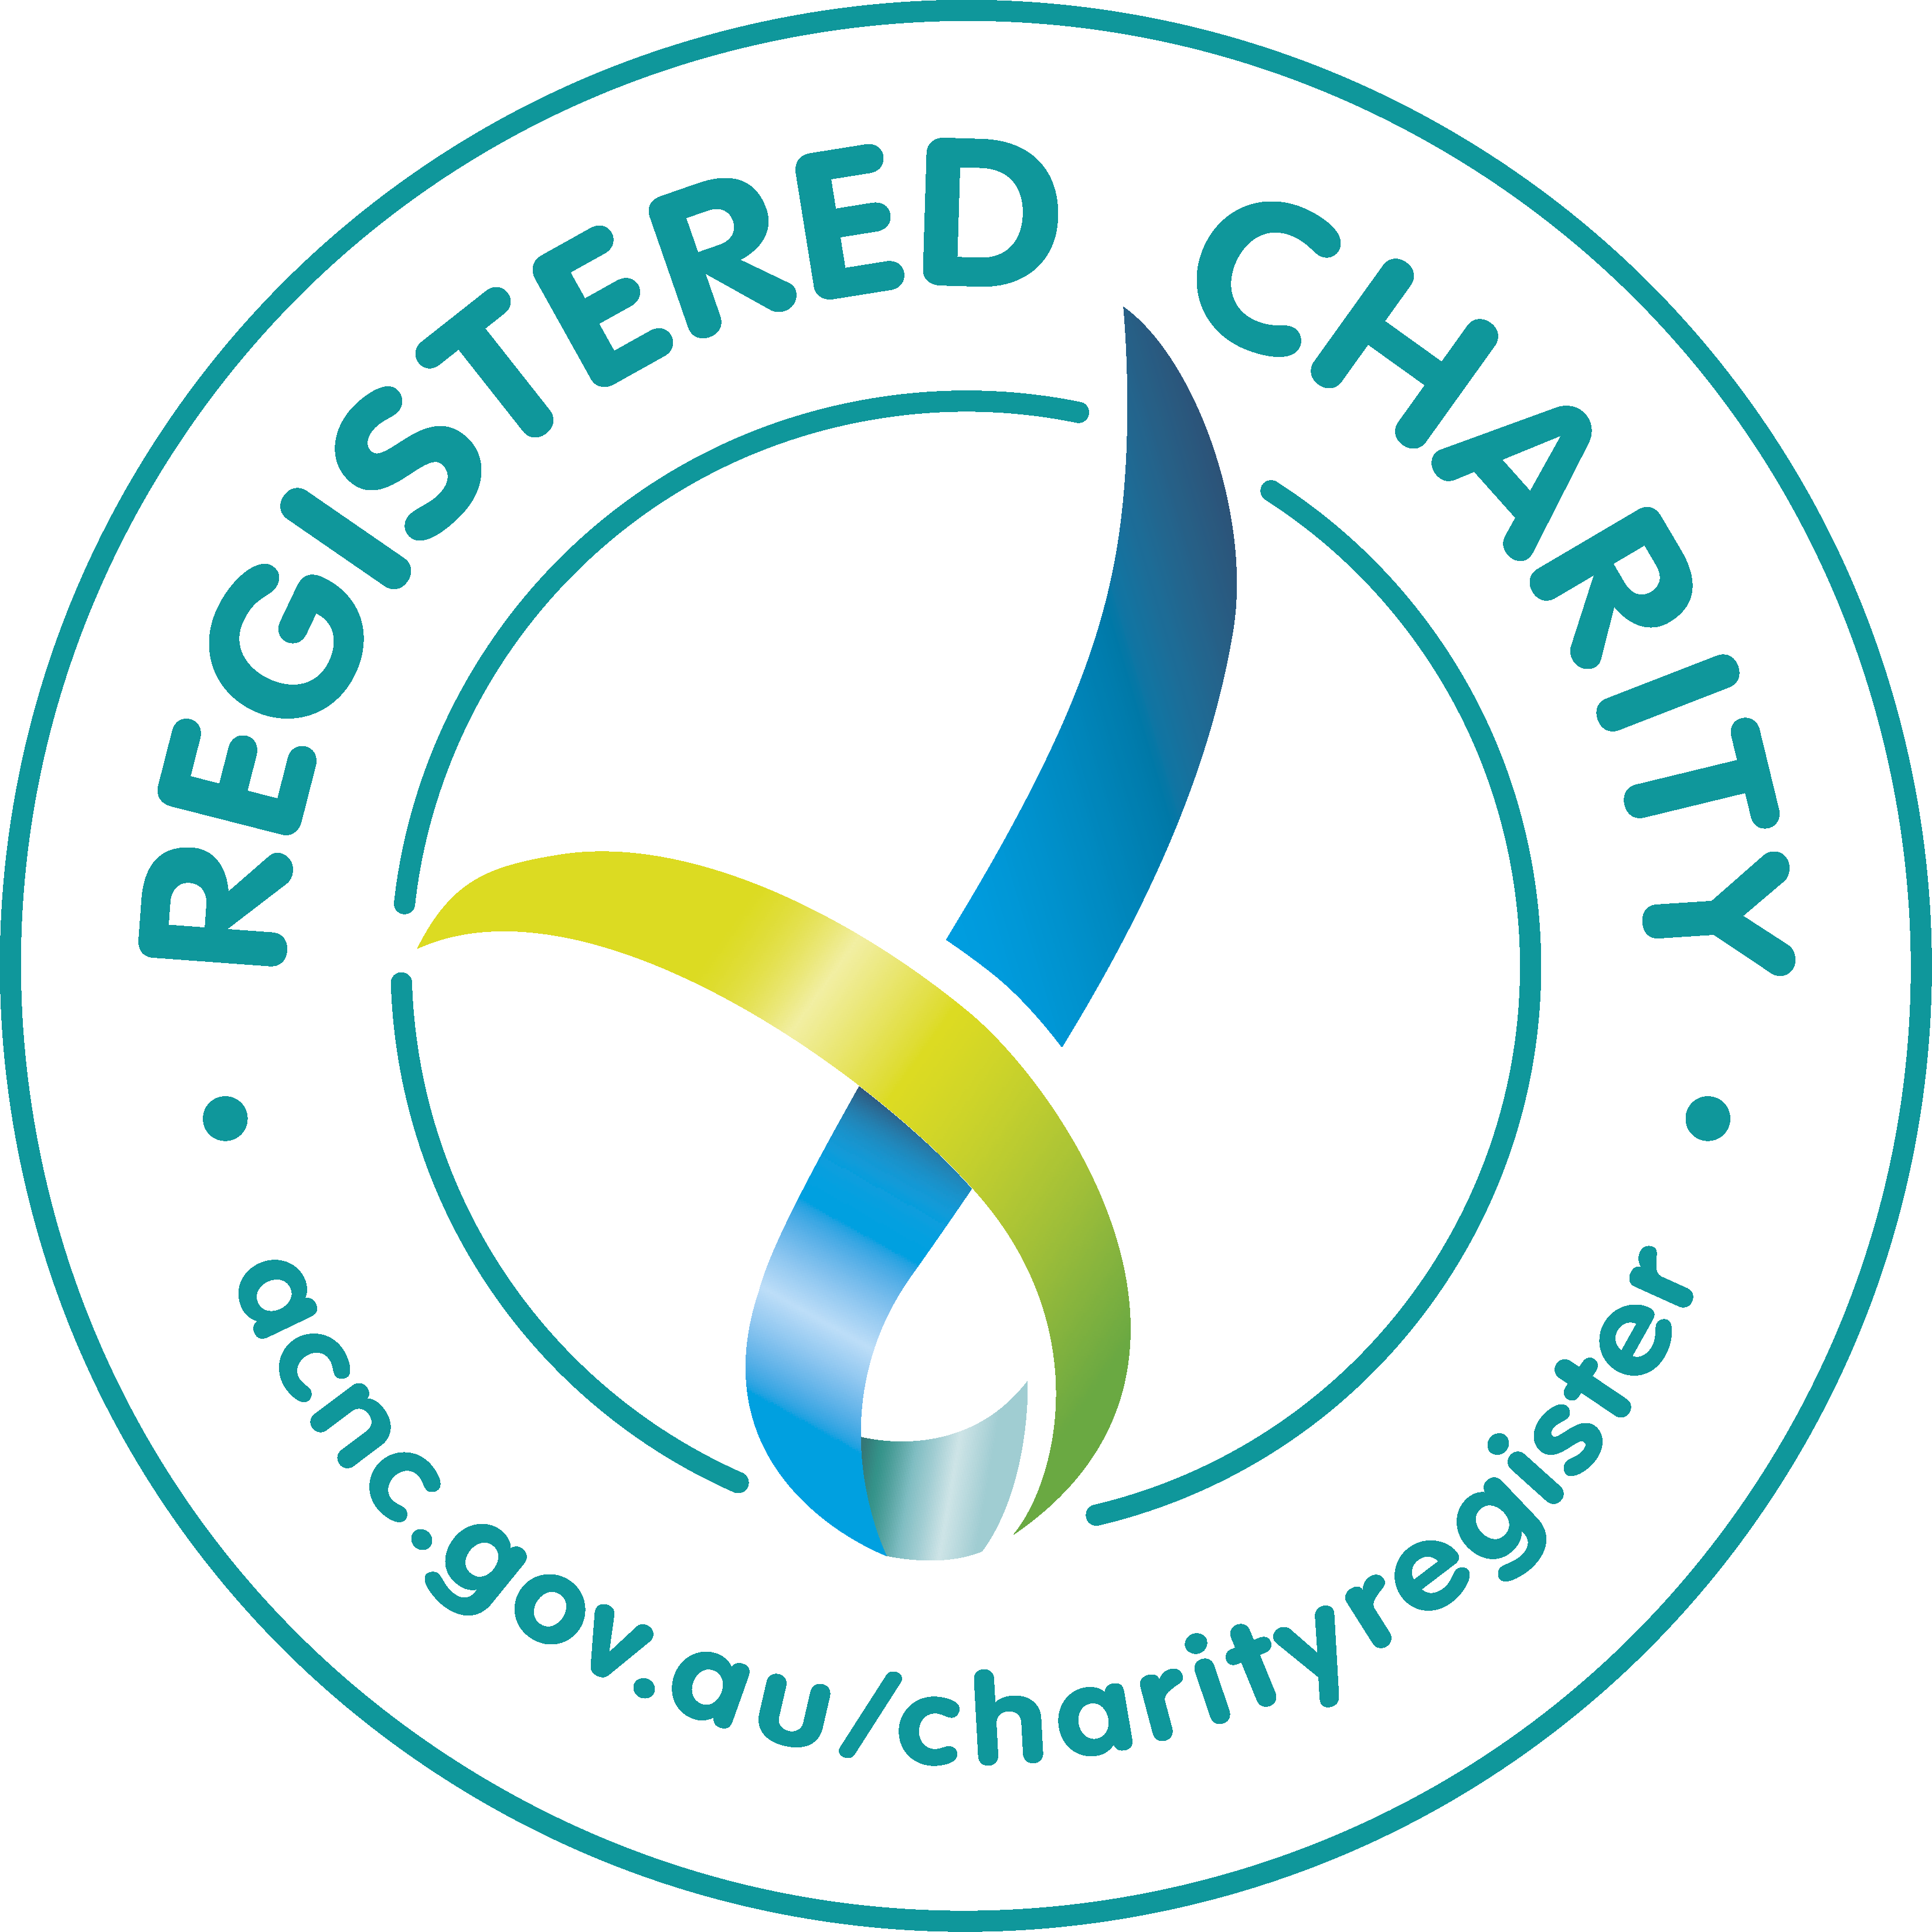 ACNC Registered Charity Logo_Colour_RGB